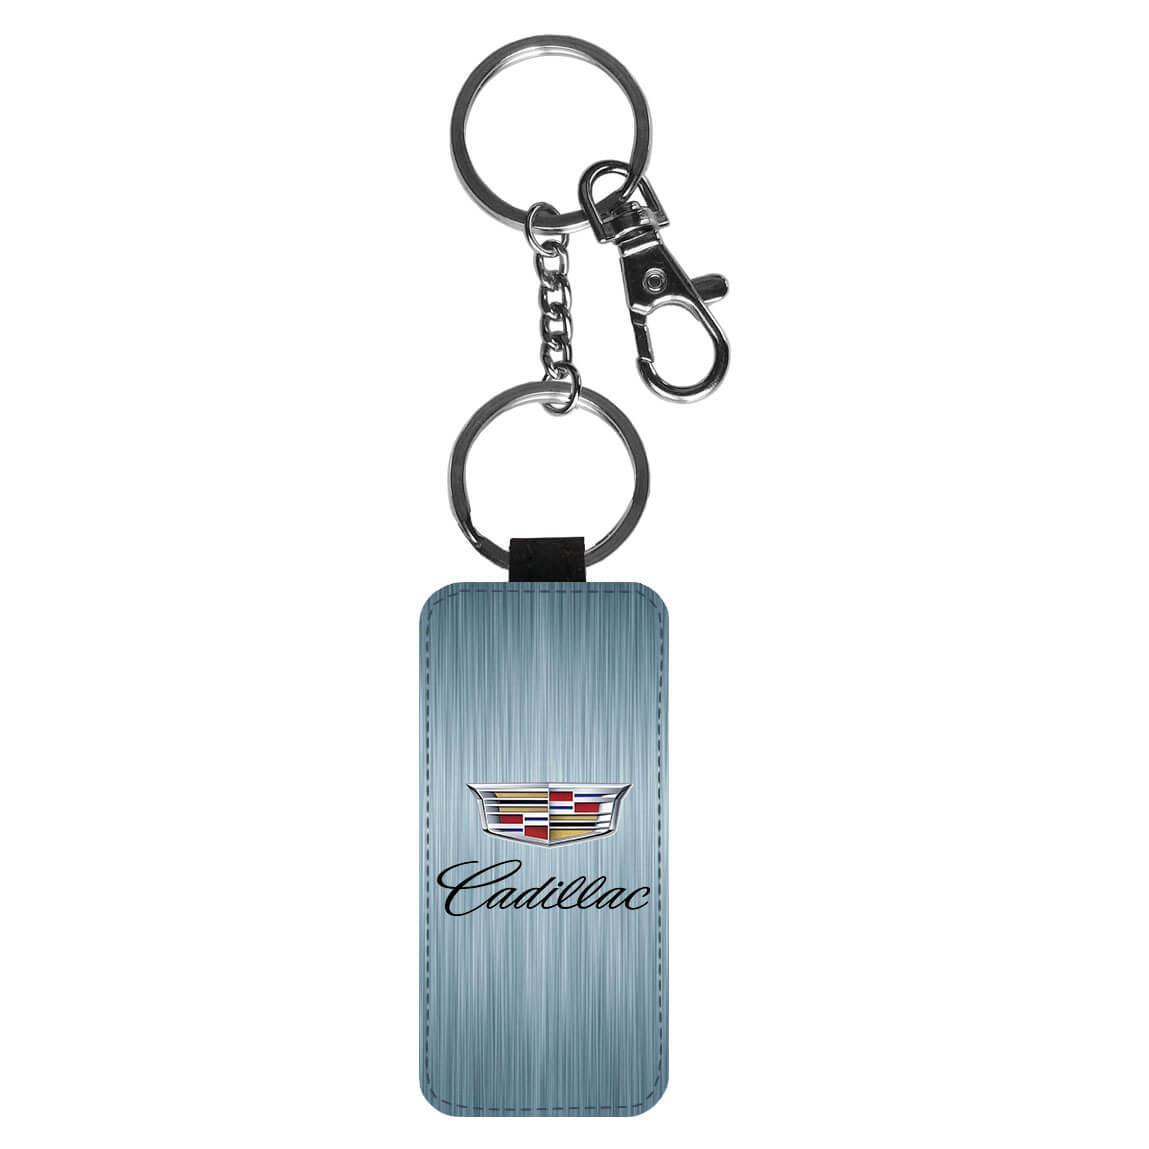 Cadillac 2014 Logo Key Ring - $12.90